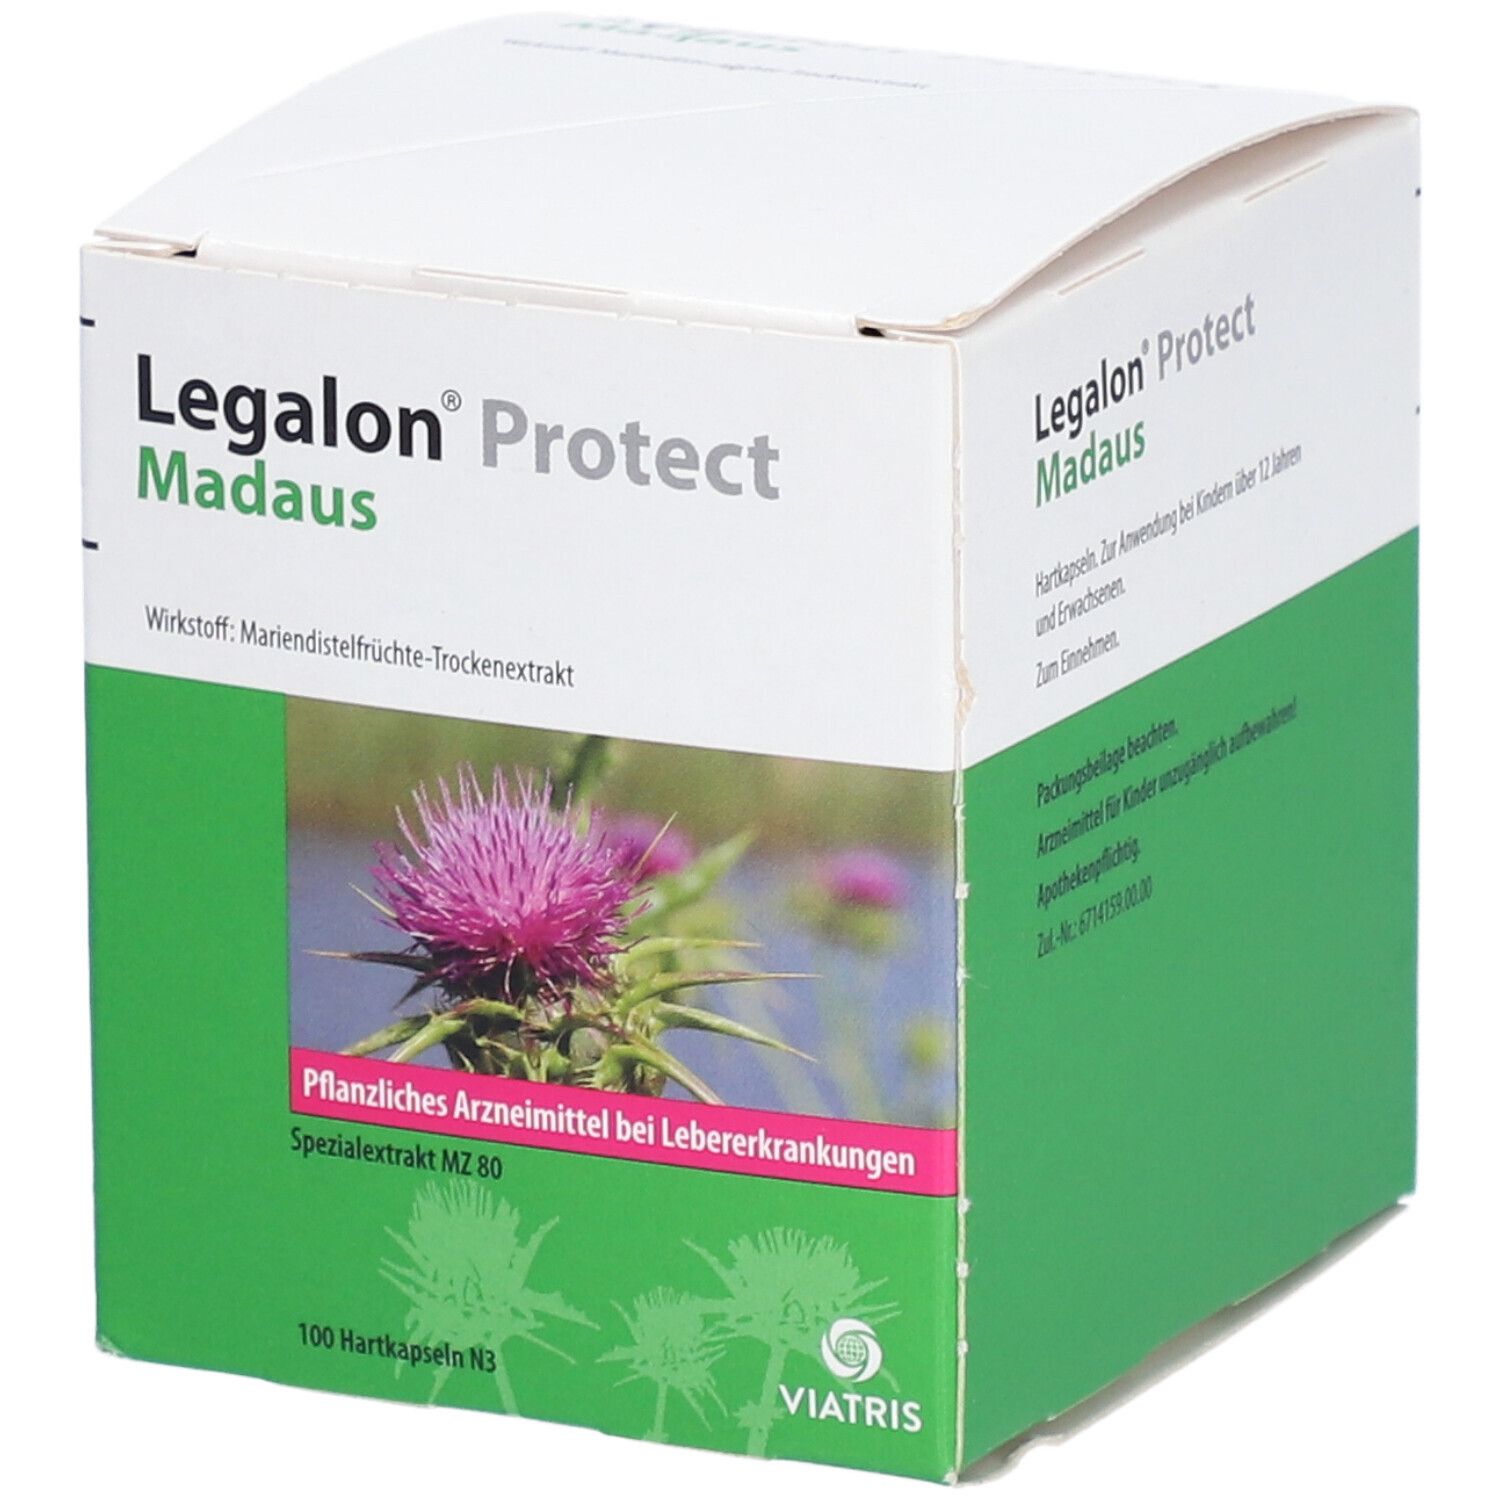 Legalon® Protect Madaus